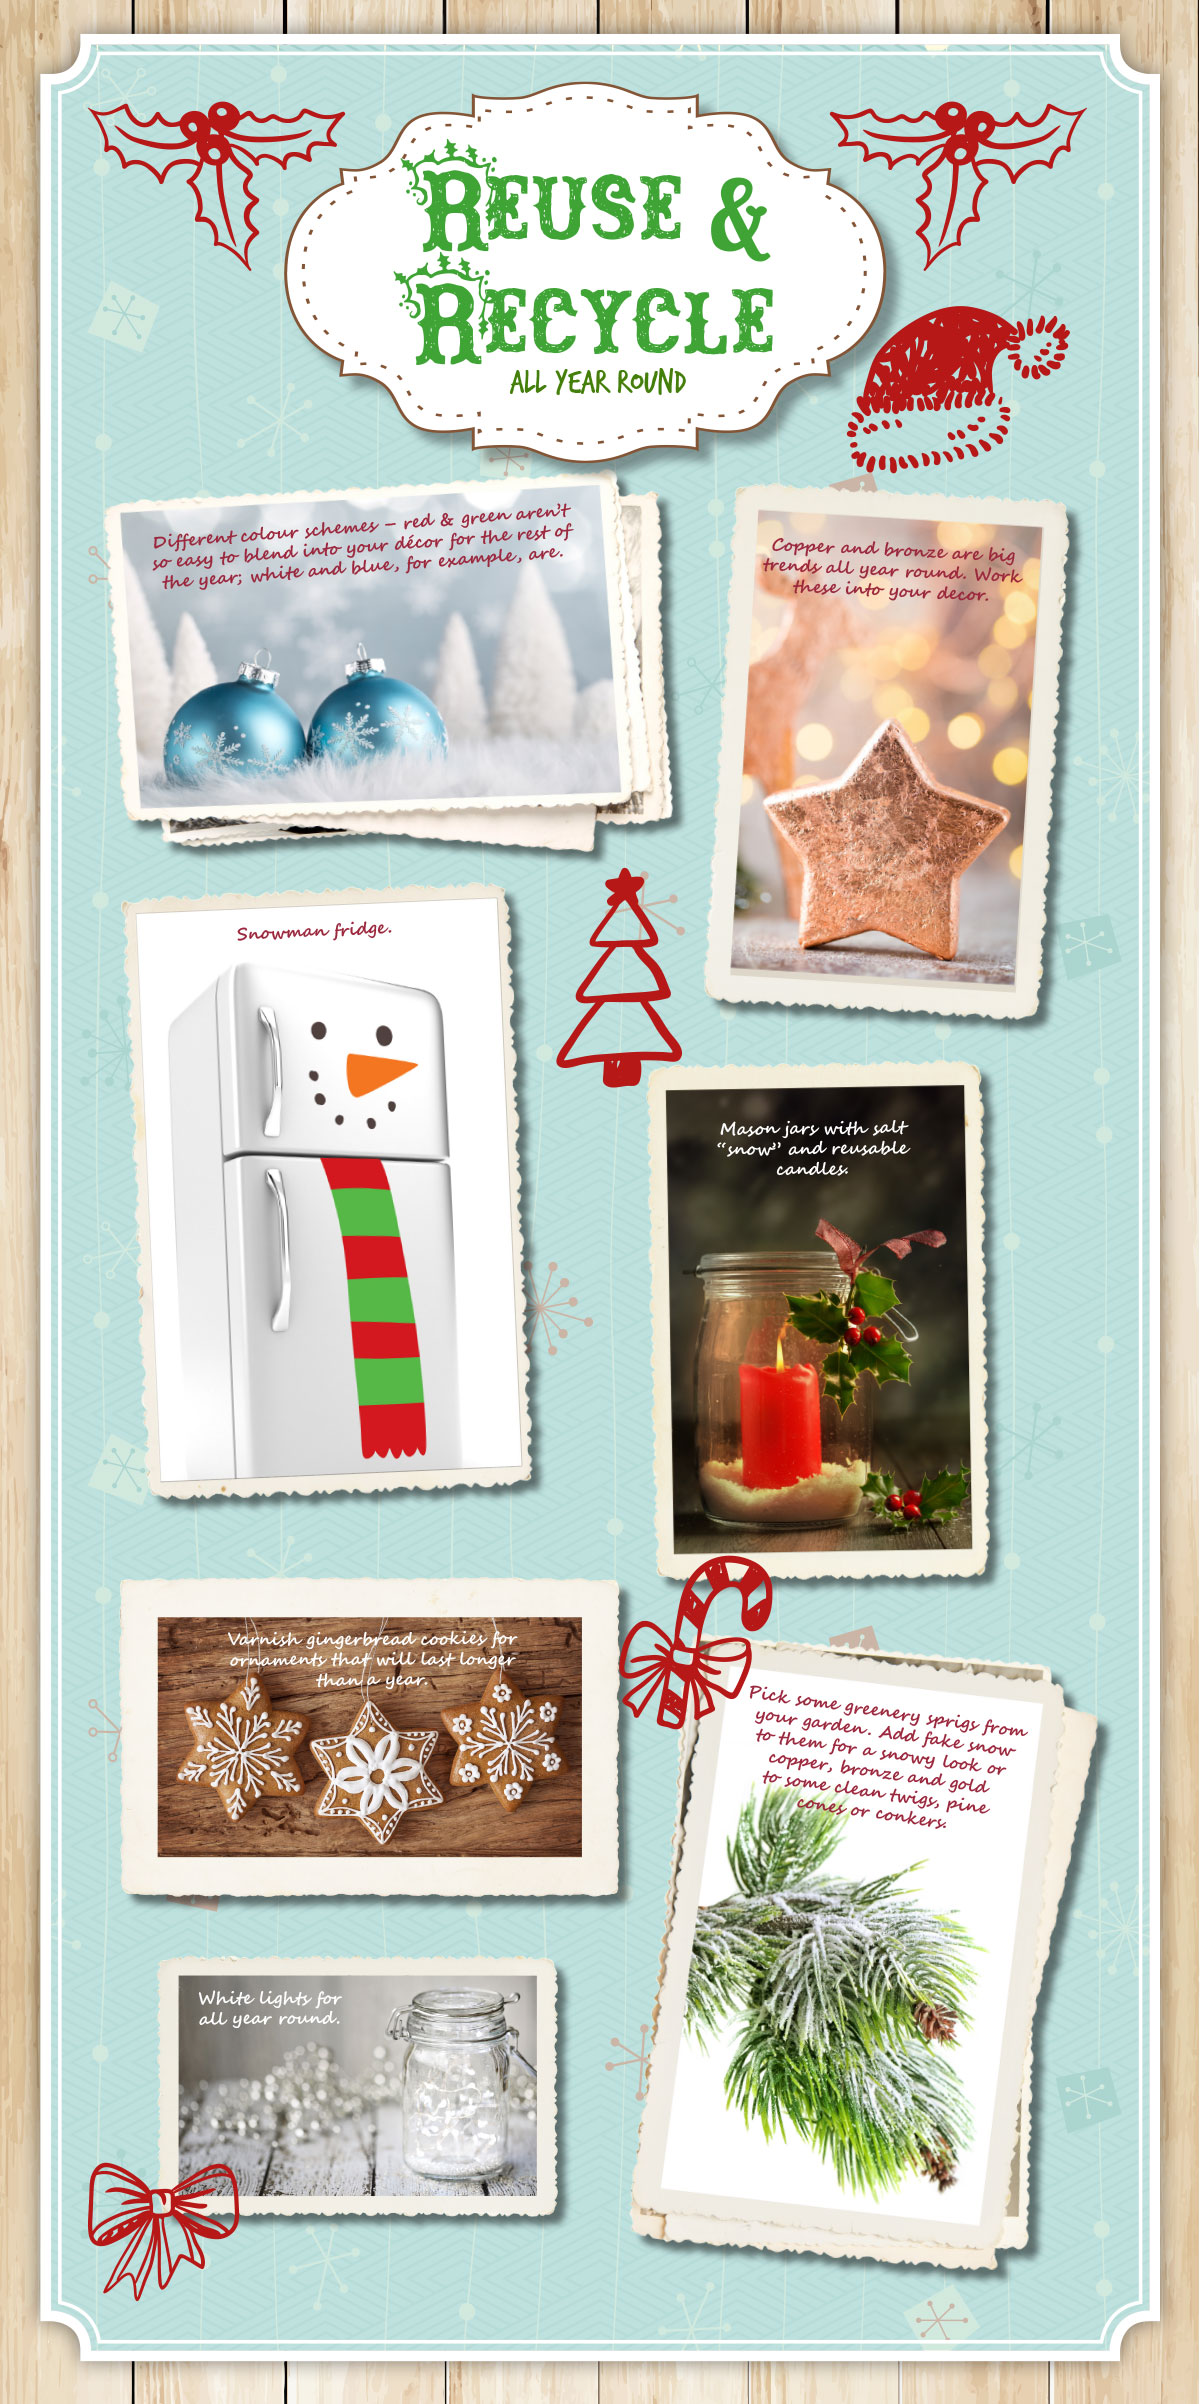 Christmas, decorations, reuse, recycle, eco, environment, DIY, festive decor, infographic, Festive Lights